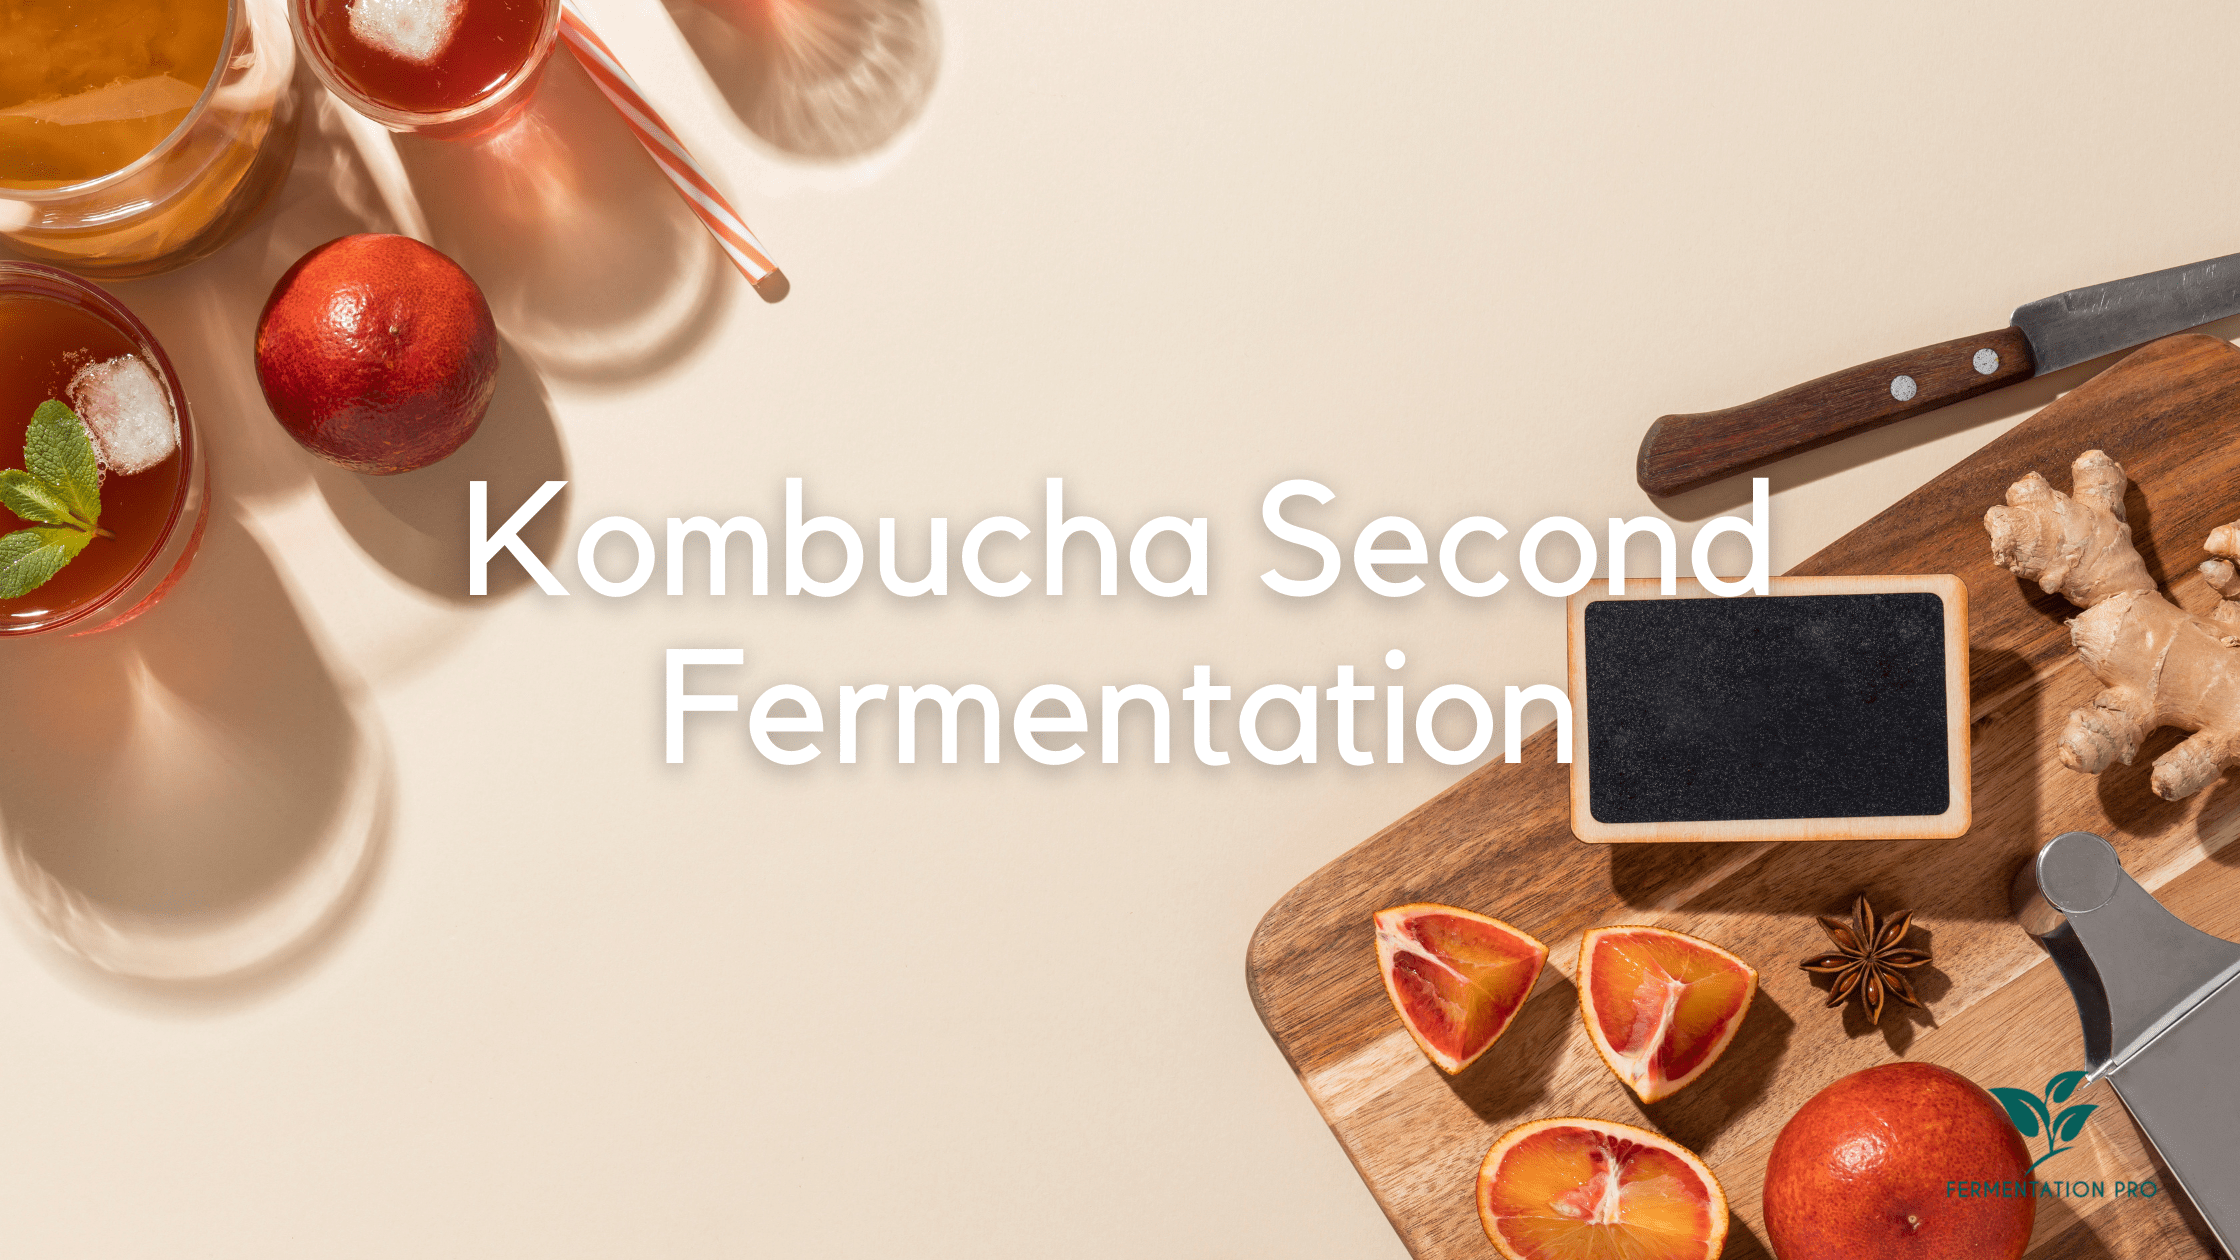 Jessica Alba Anal - Kombucha Second Fermentation - Fermentation Pro